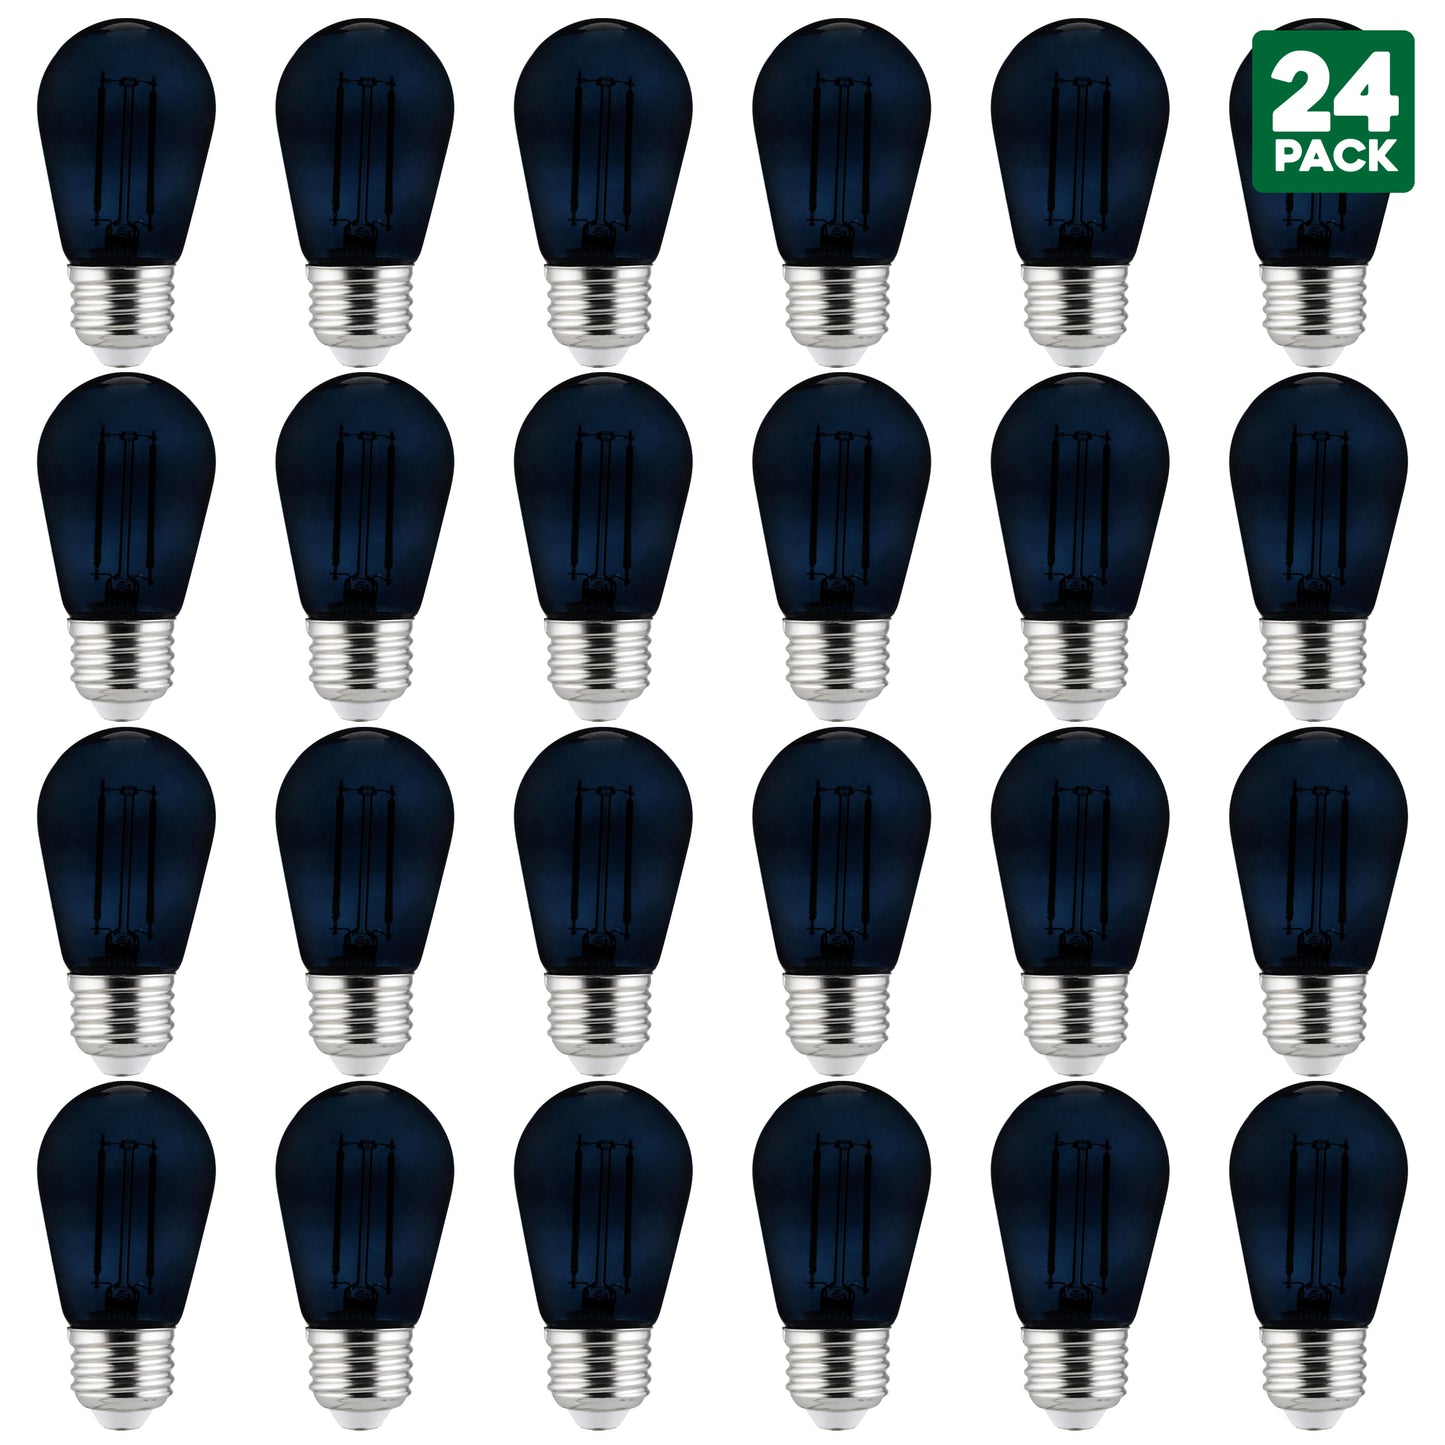 Sunlite LED Transparent Black Colored S14 Medium Base (E26) Bulb - Parties, Decorative, and Holiday 15,000 Hours Average Life